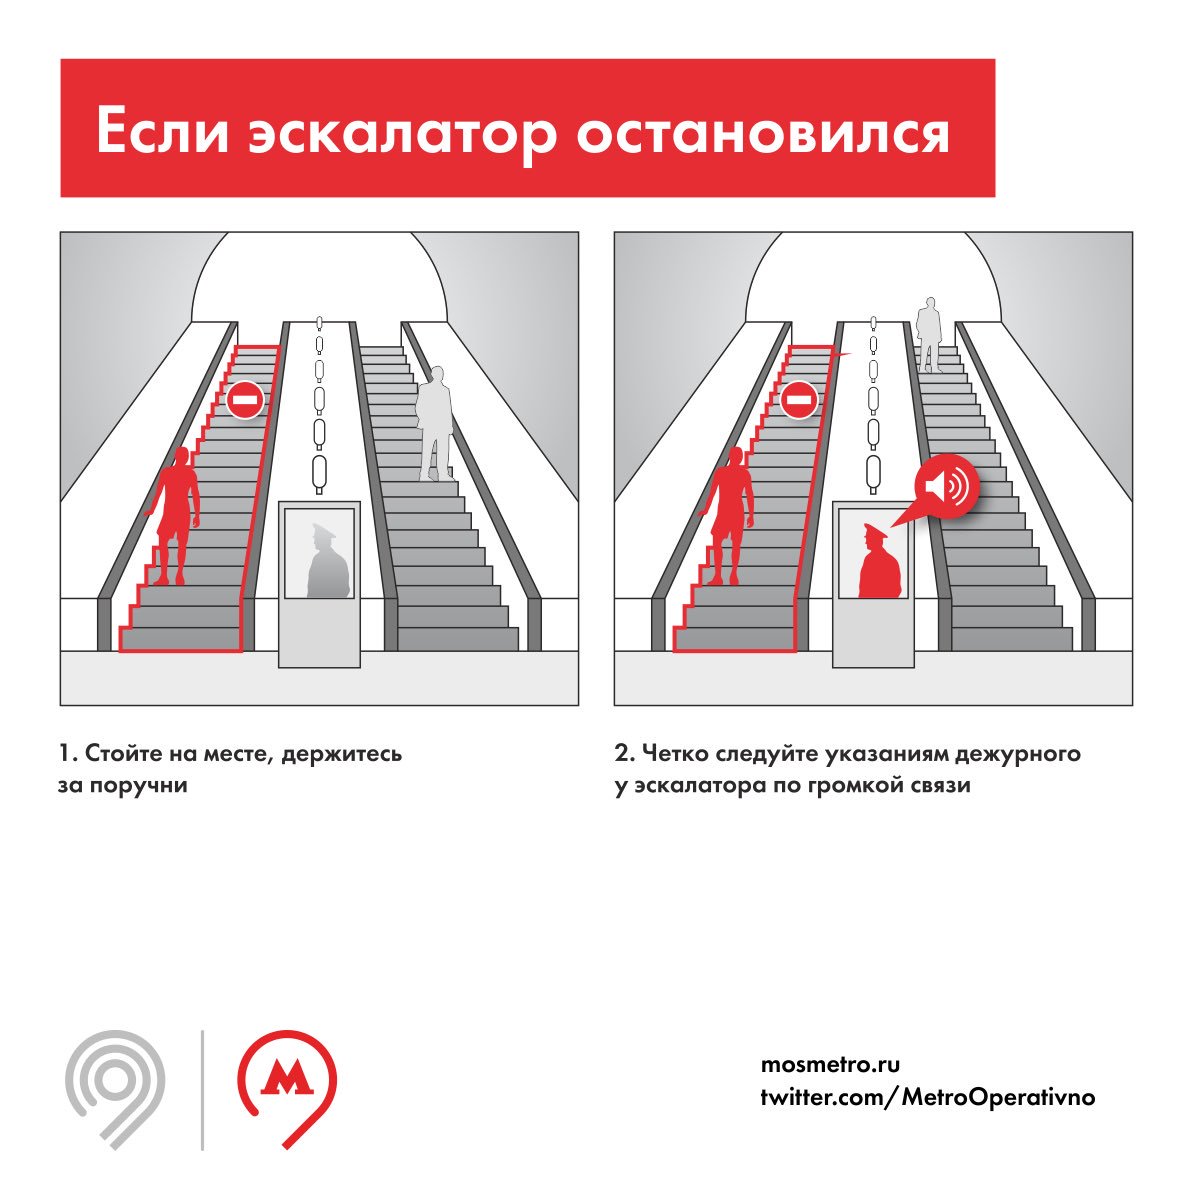 Презентация знаки безопасности в метро. Правила поведения в метрополитене на эскалаторе. Безопасность на эскалаторе в метро. Безопасность в метрополитене. Правила на эскалаторе.